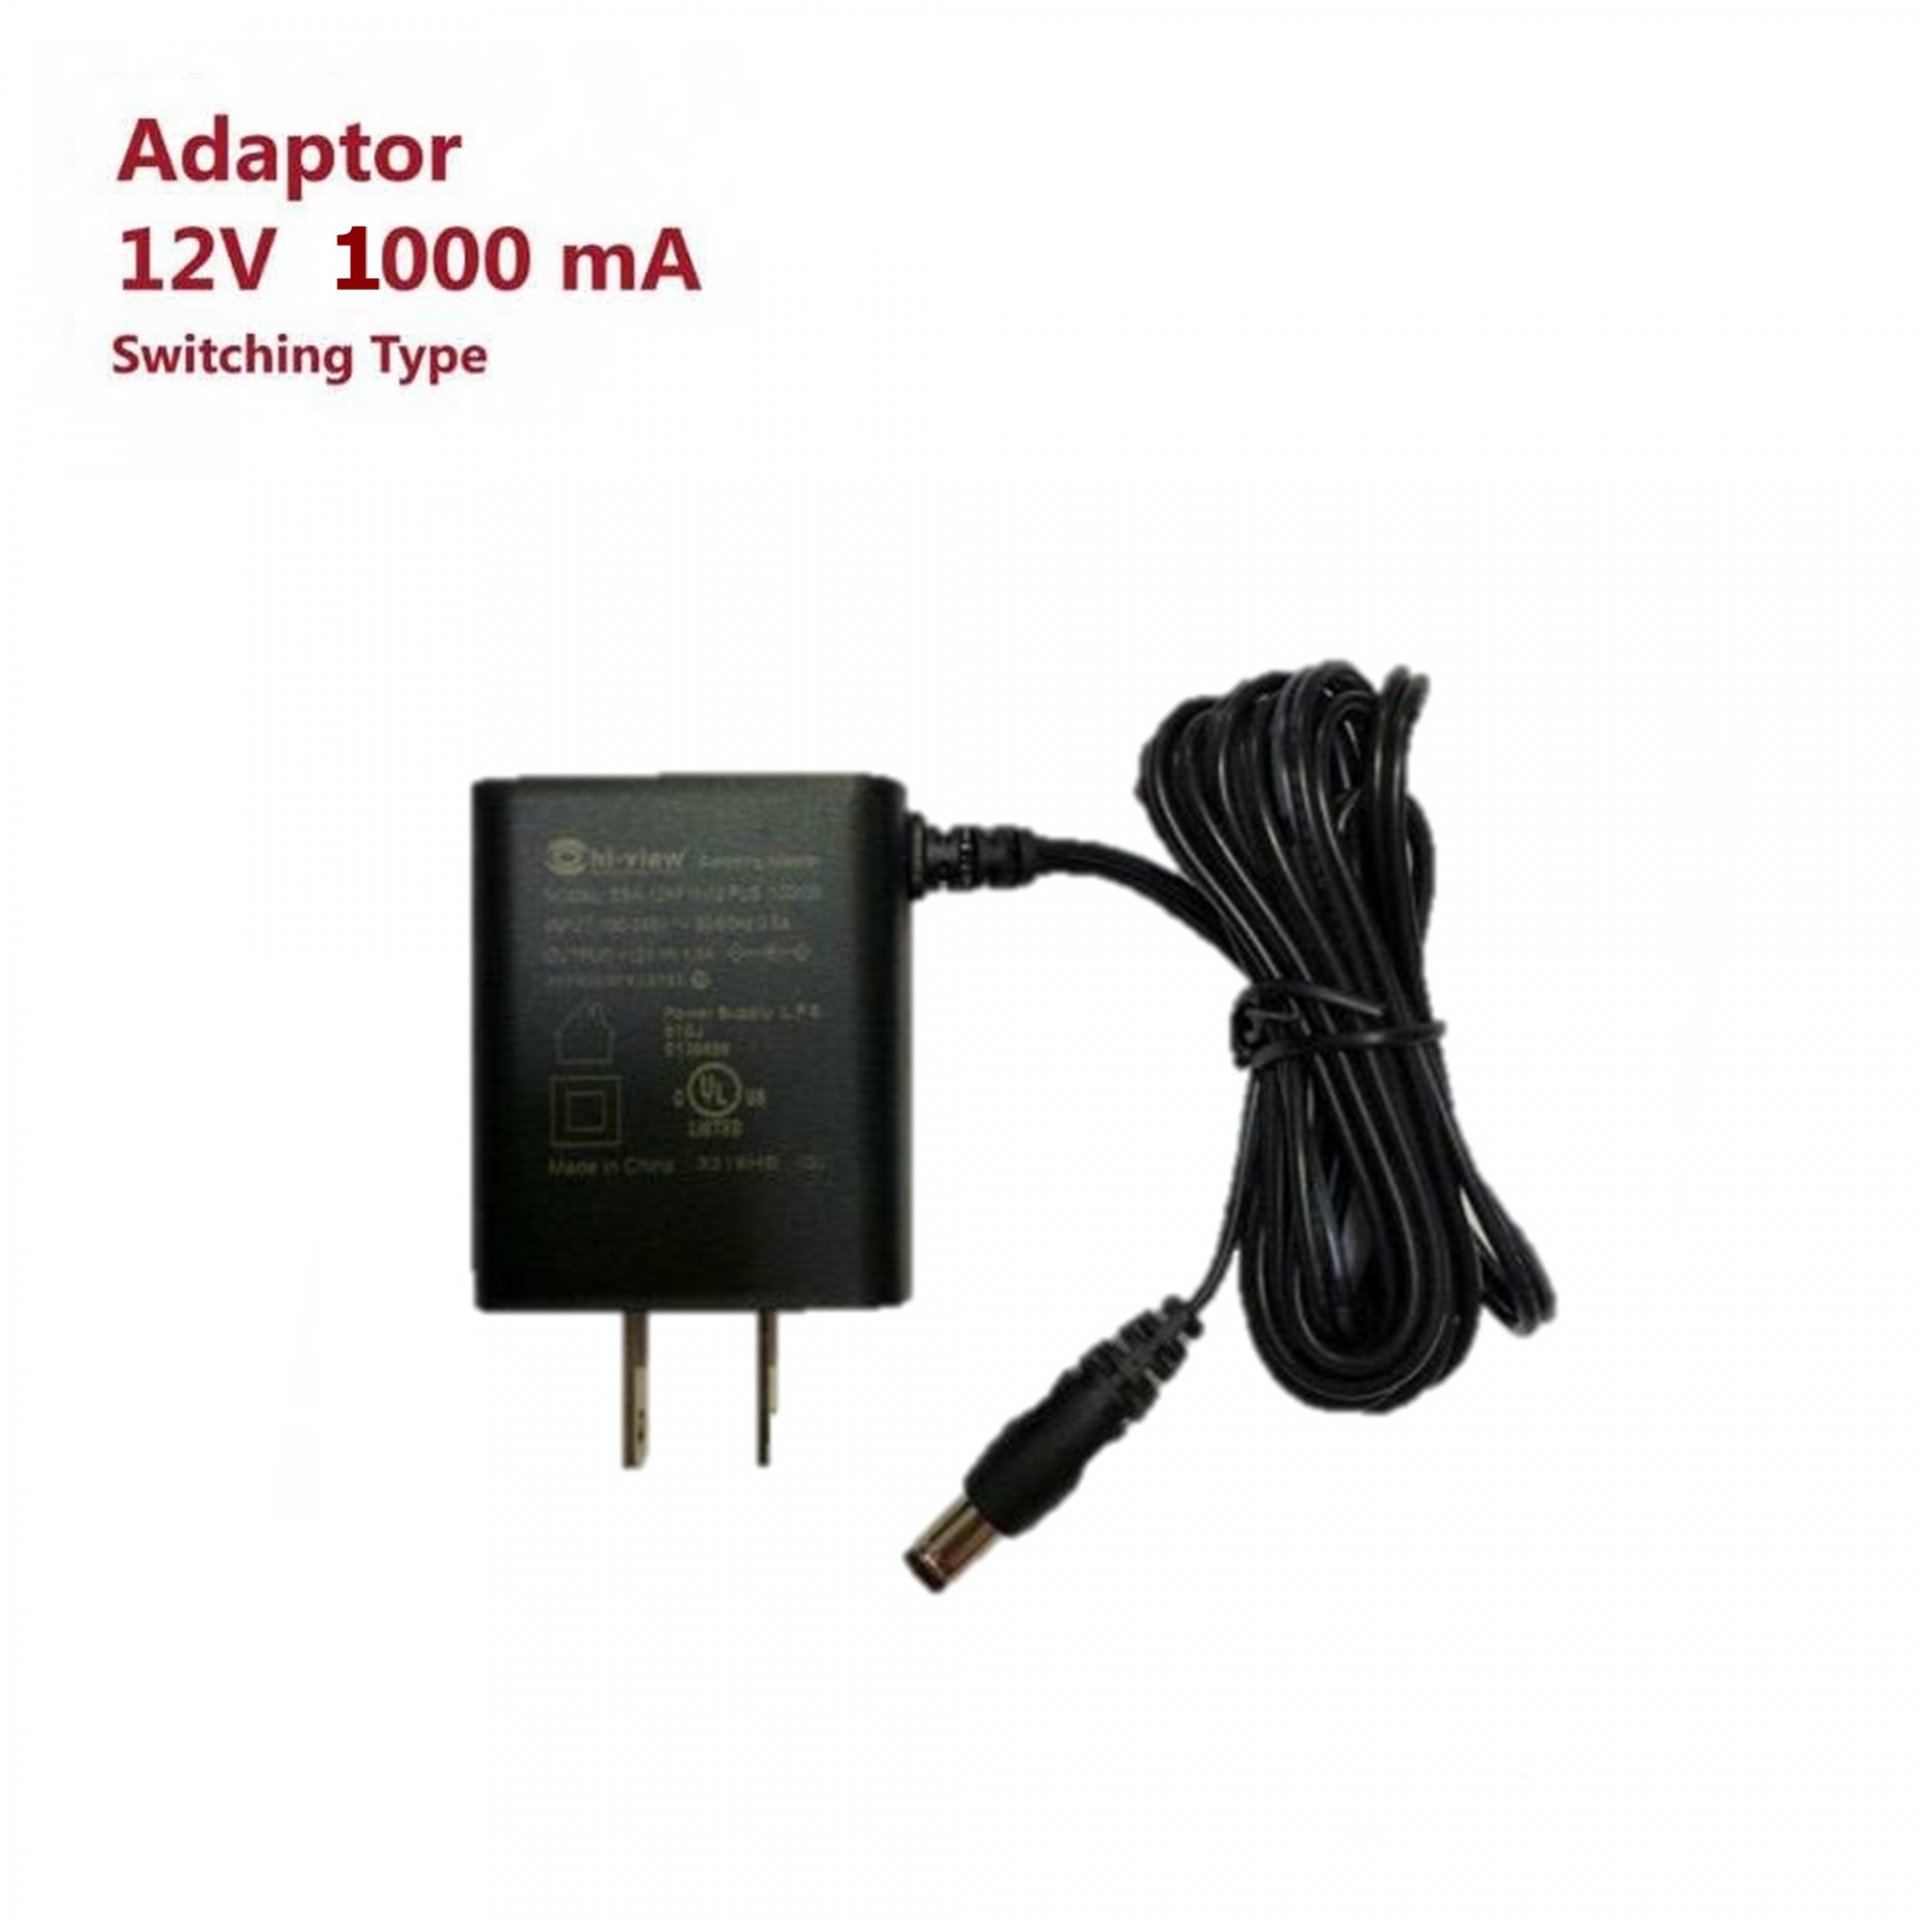 Adaptor 1A 12V 1000 mA